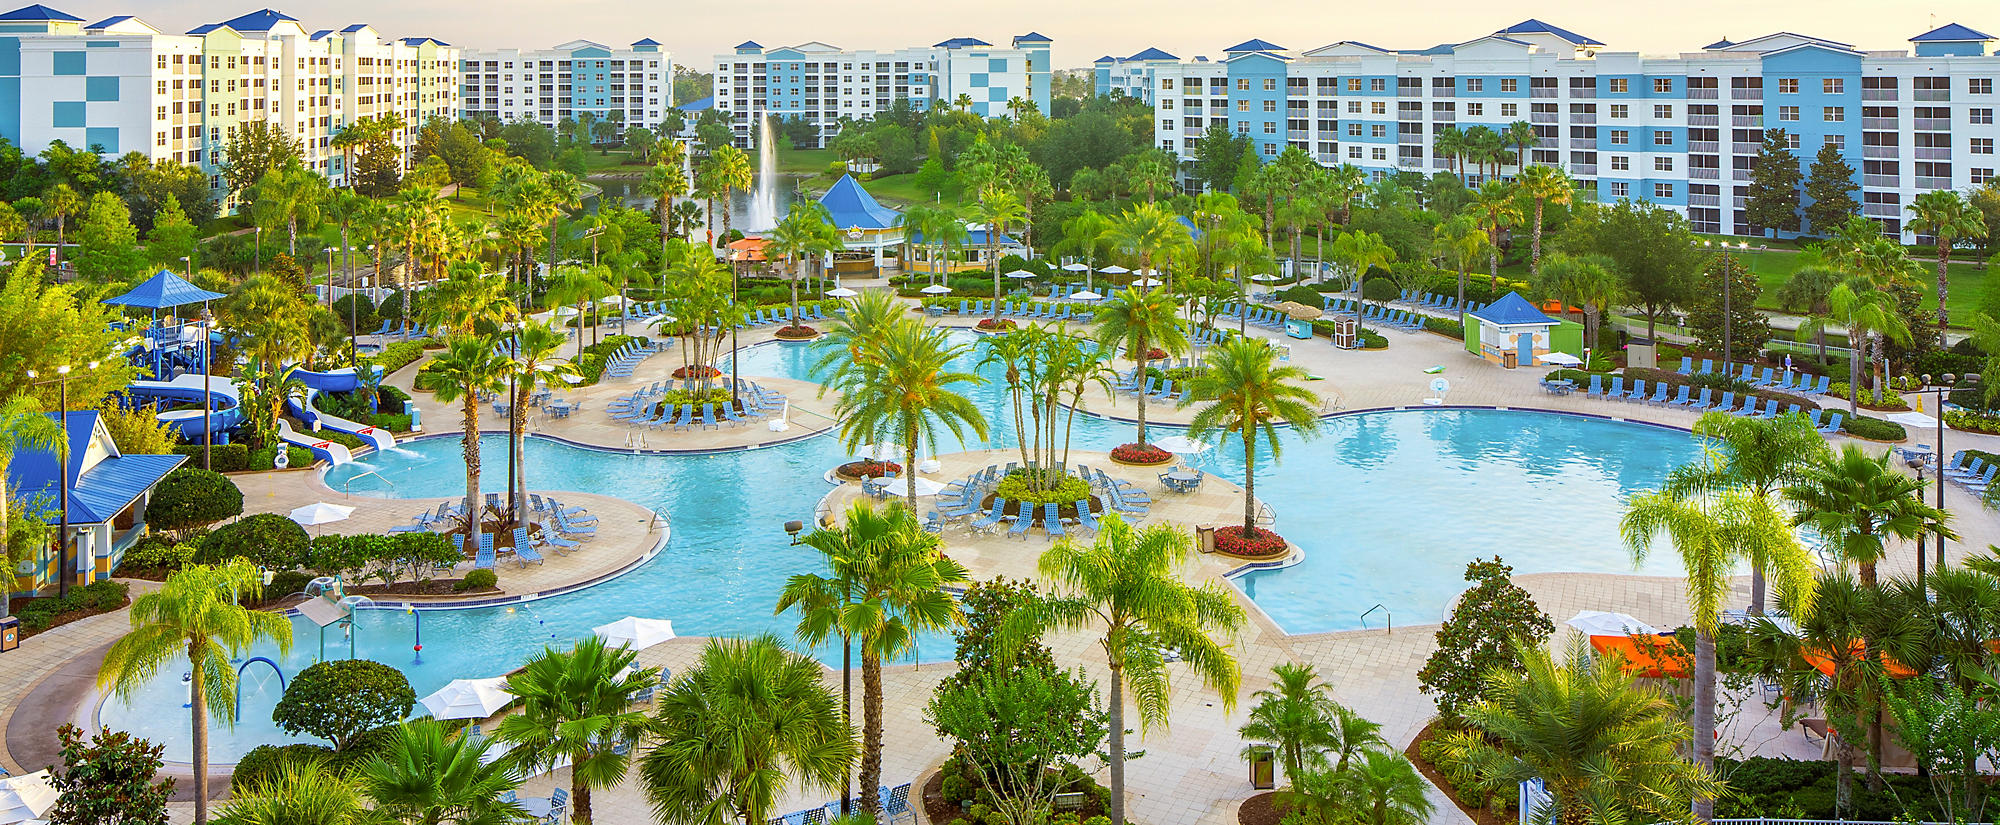 The Fountains Pool in Orlando Florida